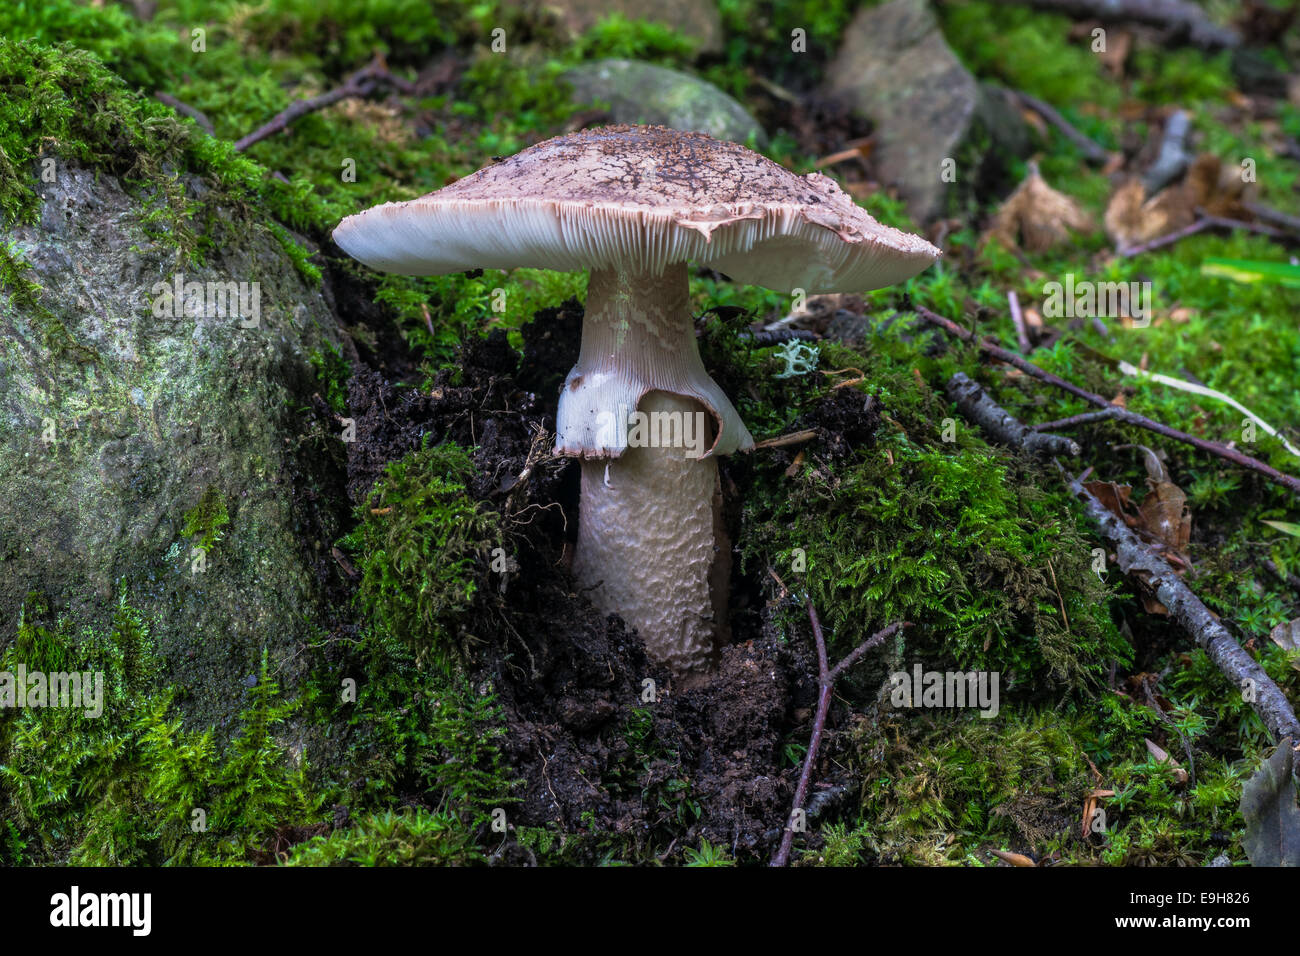 Blusher or Amanita Rubescens mushroom Stock Photo